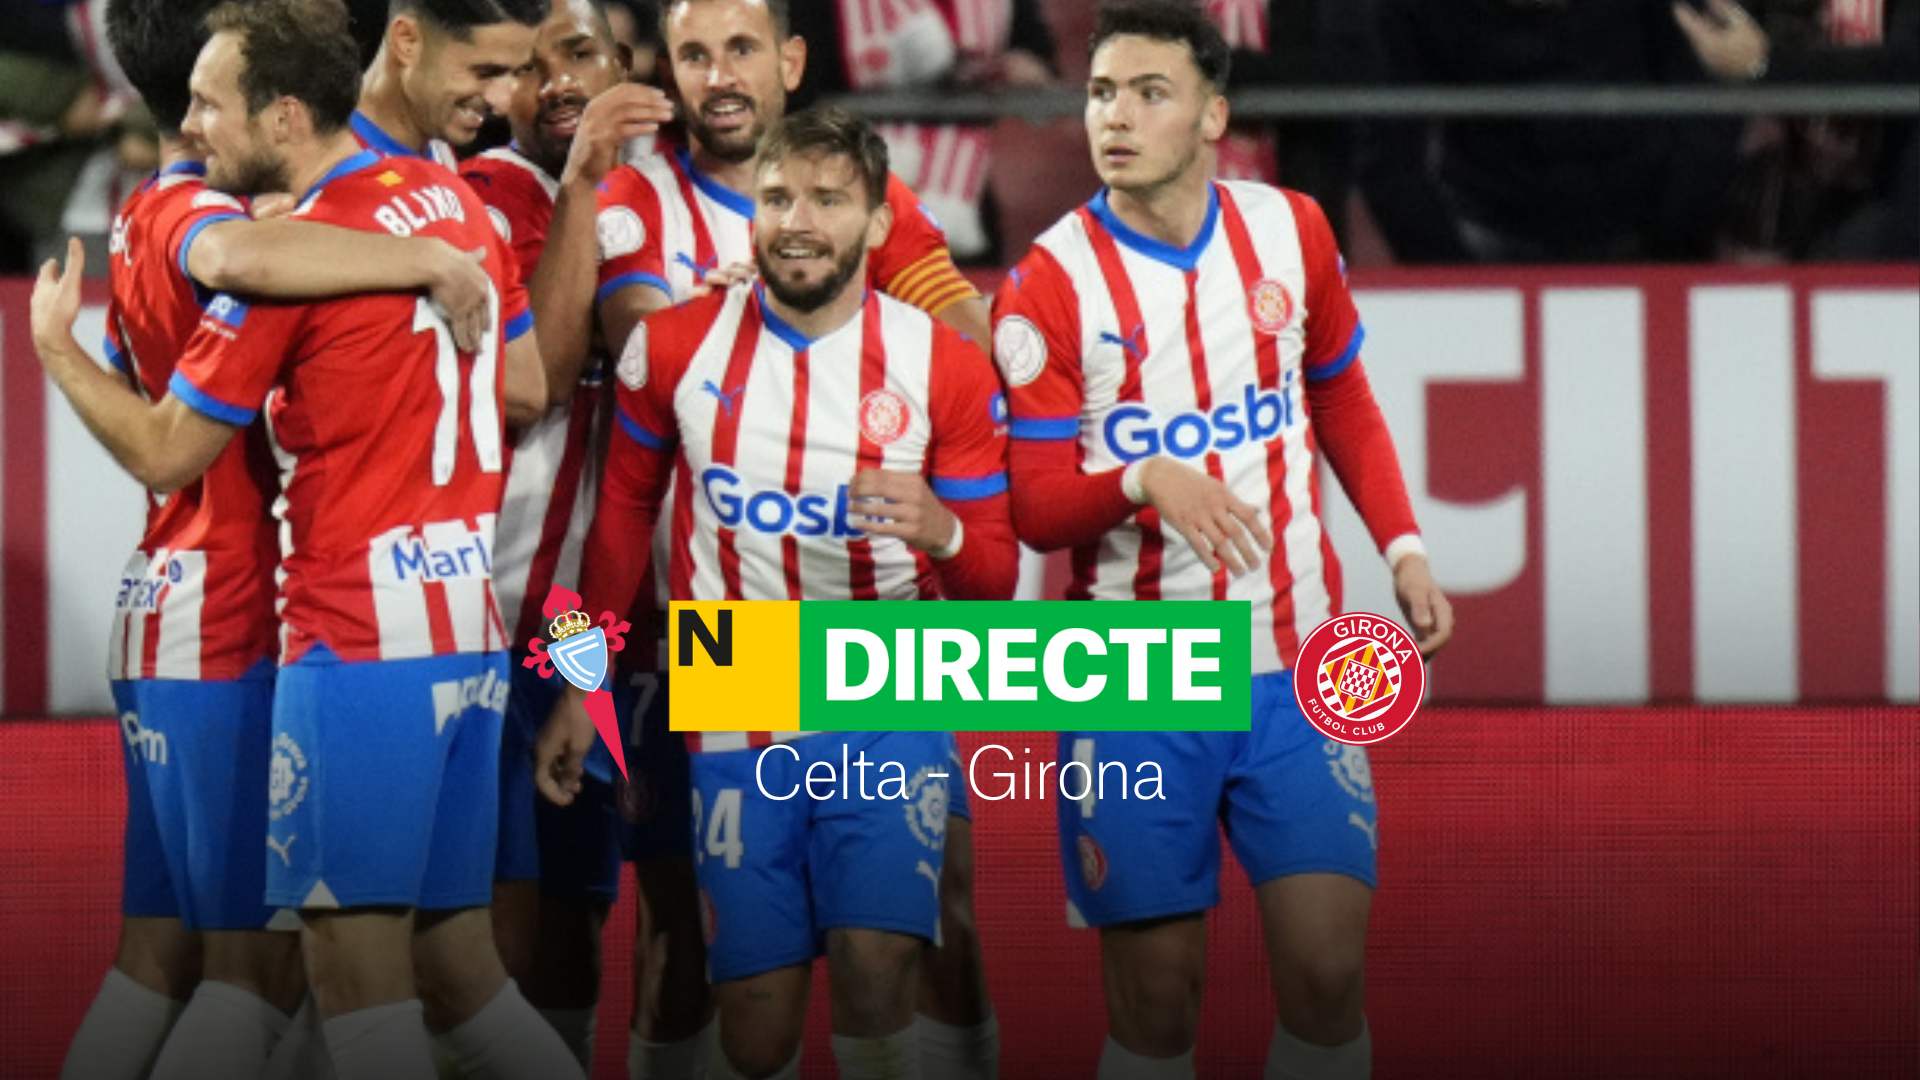 Celta-Girona avui de LaLiga EA Sports, DIRECTE |Resultat, resum i gols